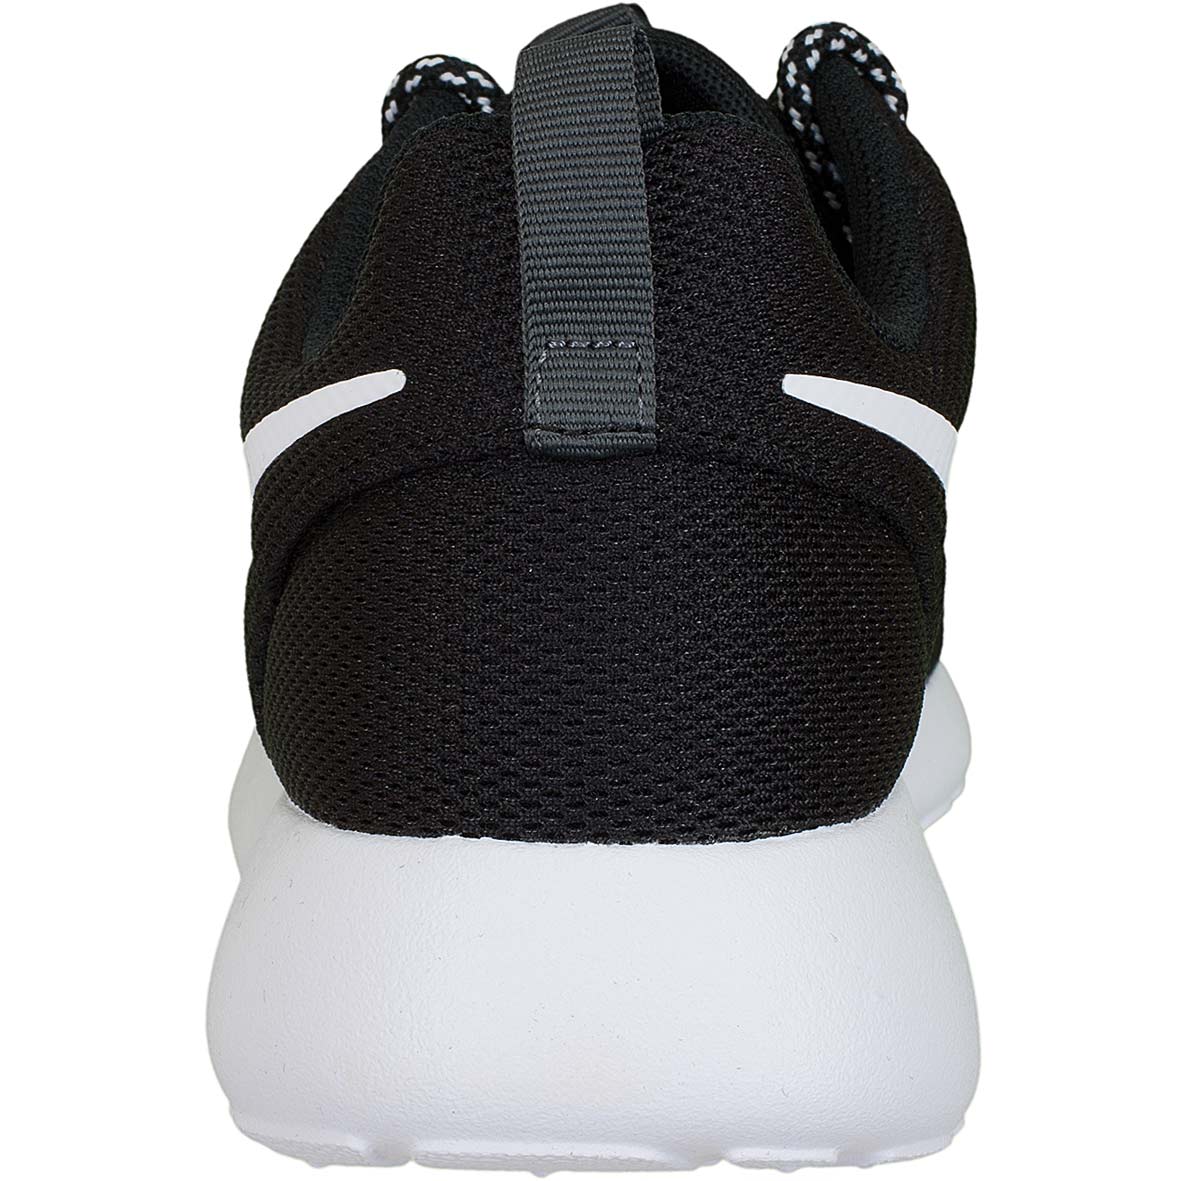 ☆ Nike Damen Sneaker Roshe One schwarz/weiß - hier bestellen!